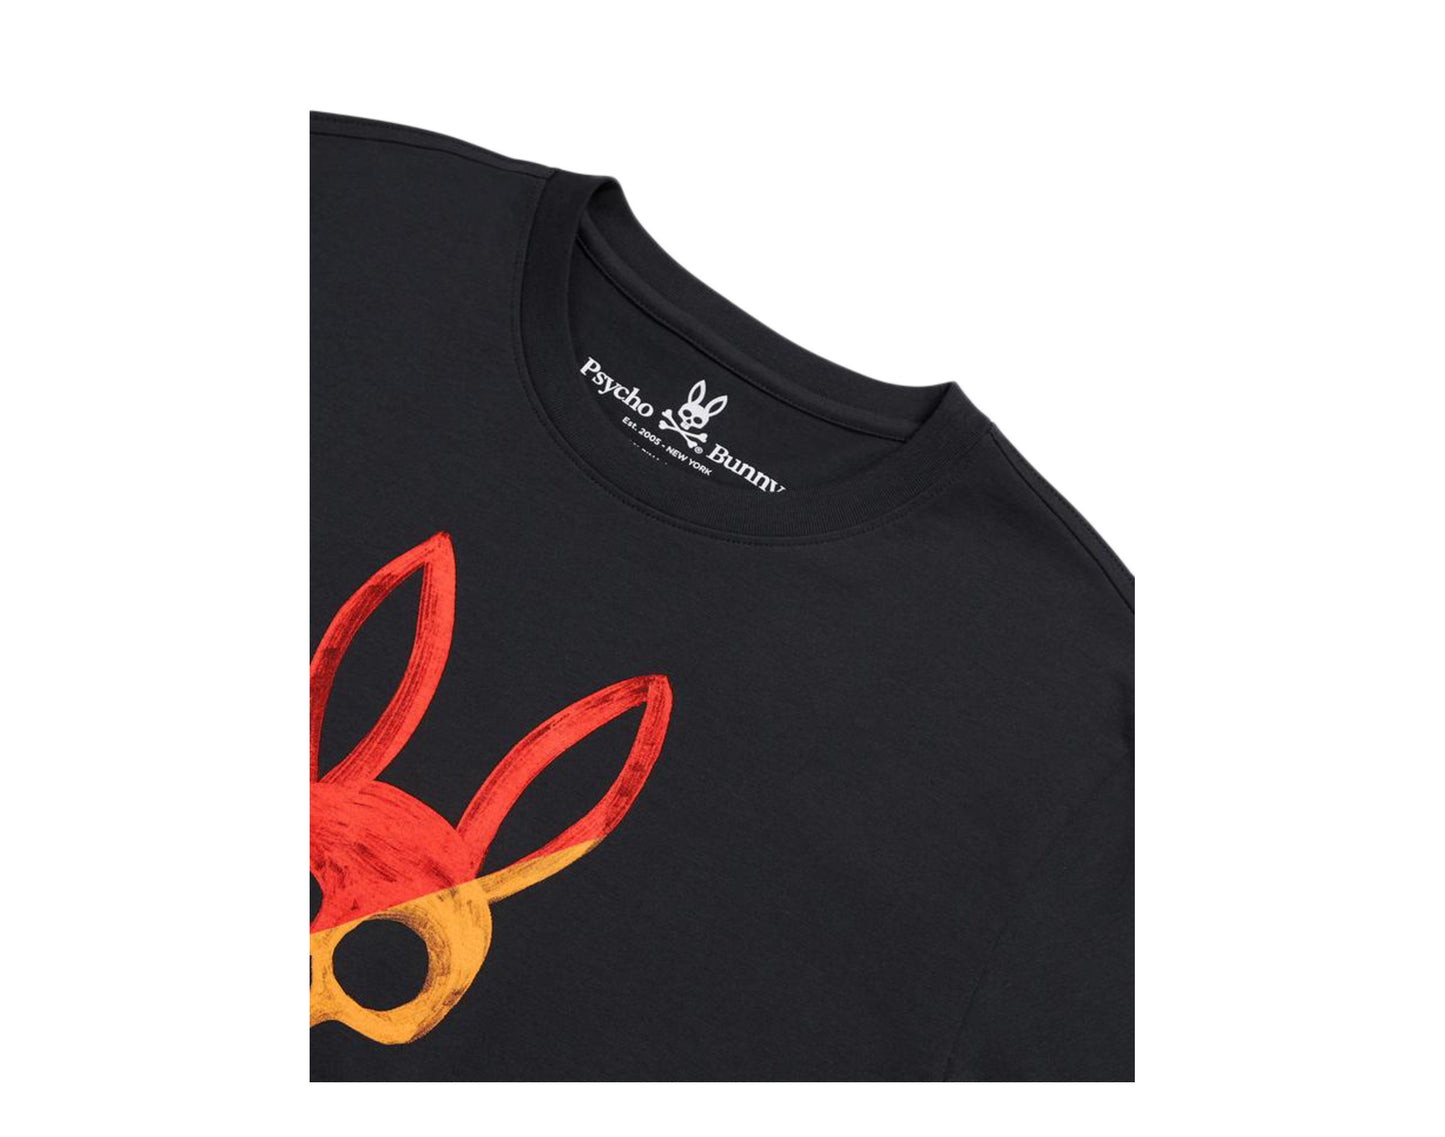 Psycho Bunny Andover Graphic Navy/Orange Men's Tee Shirt B6U999L1PC-NVY